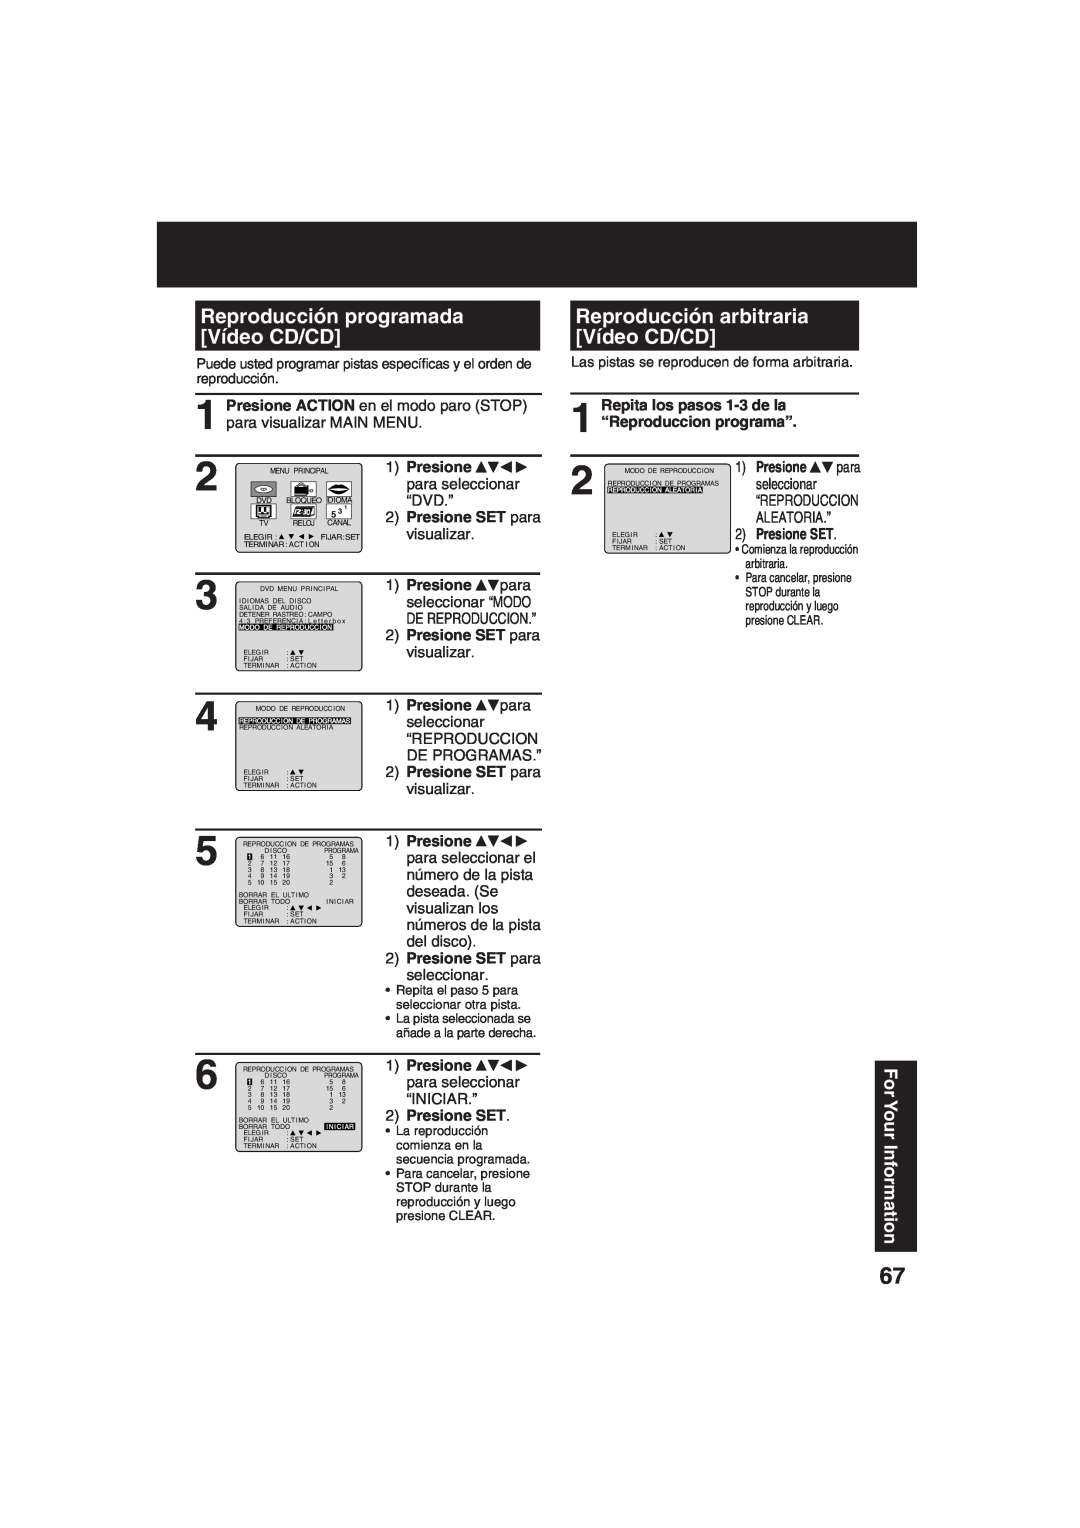 Panasonic PV-DF273 manual Reproducción programada Vídeo CD/CD, Reproducción arbitraria Vídeo CD/CD, For Your Information 